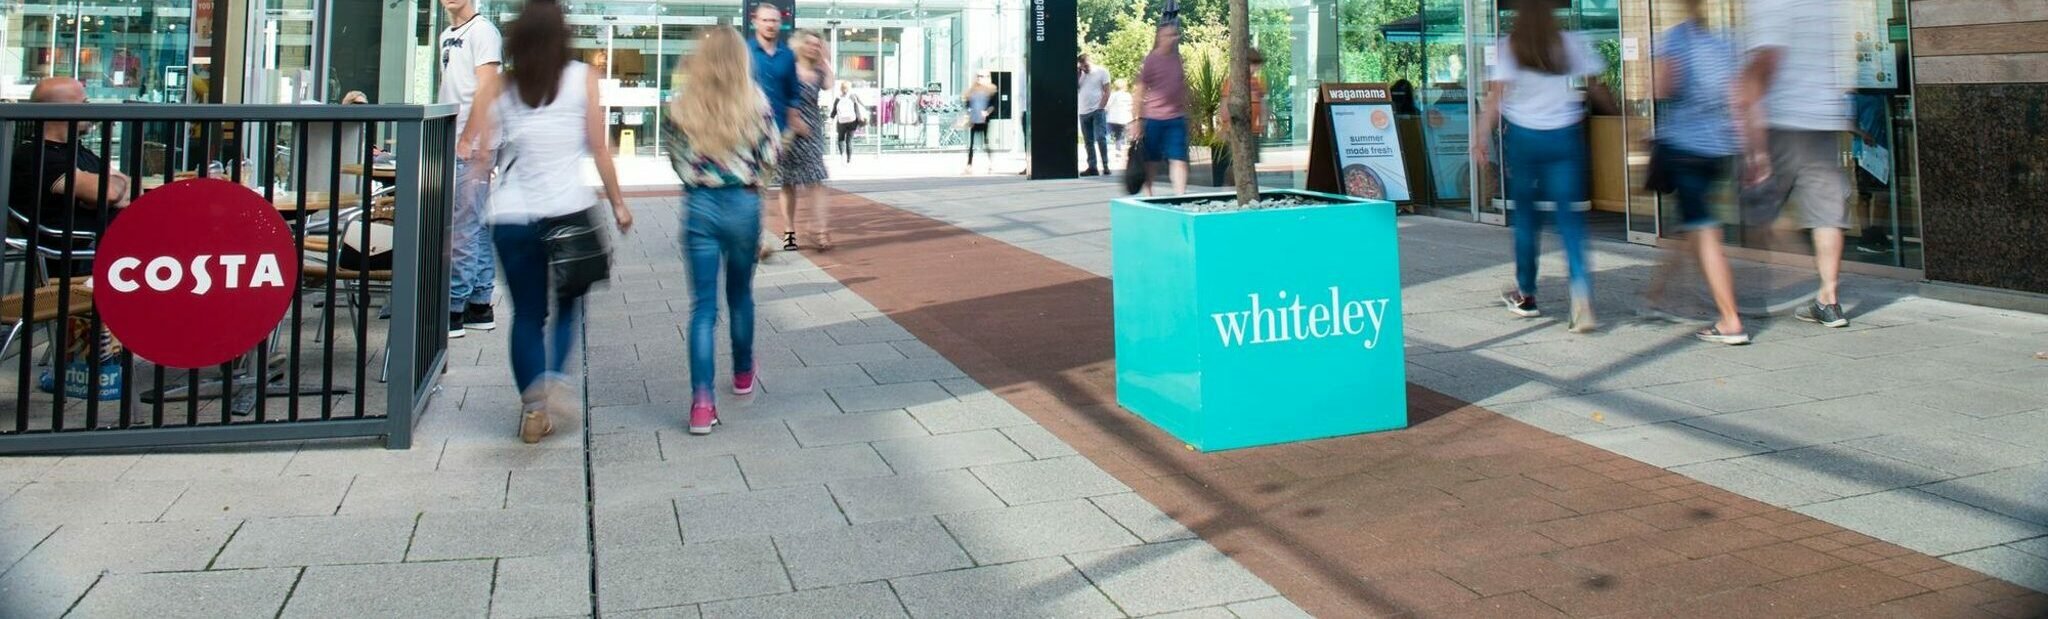 Centro commerciale whiteley